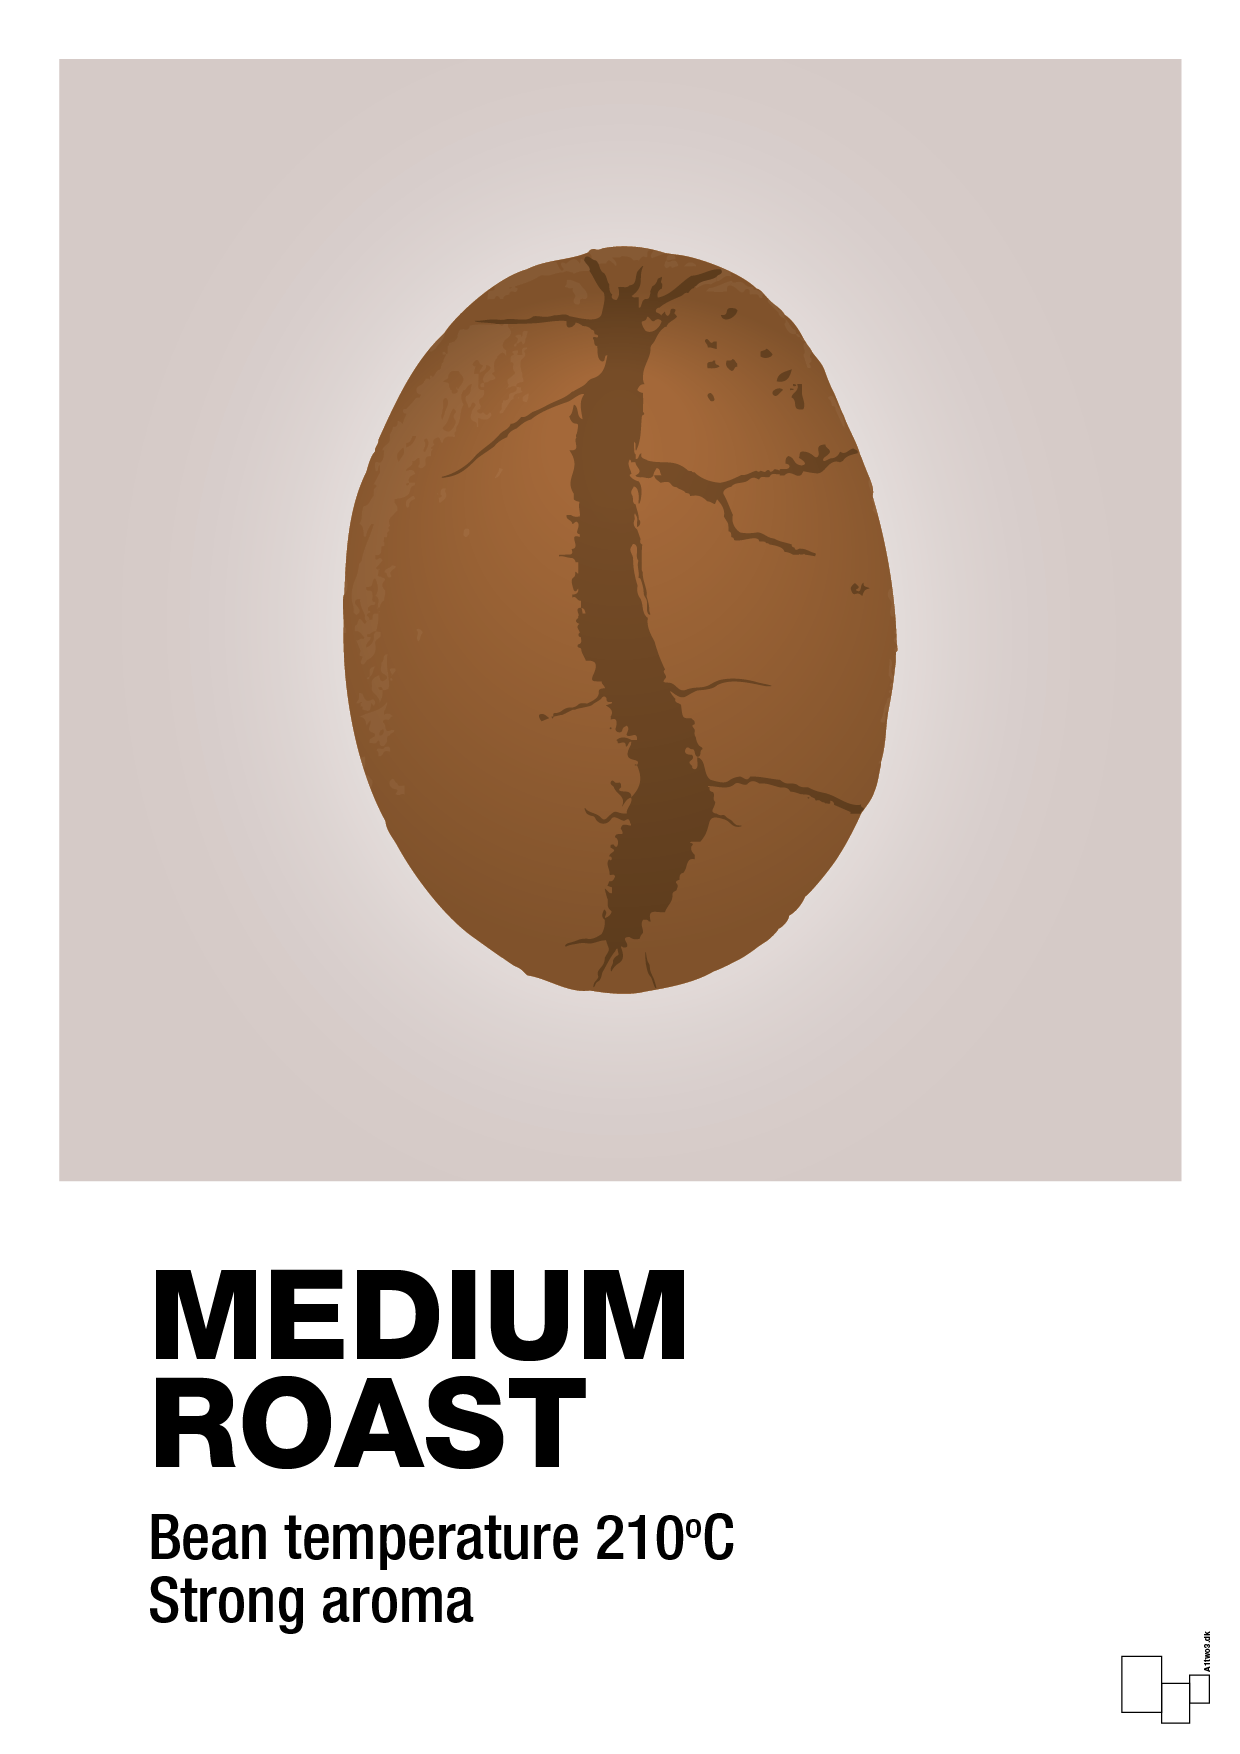 medium roast - Plakat med Mad & Drikke i Broken Beige